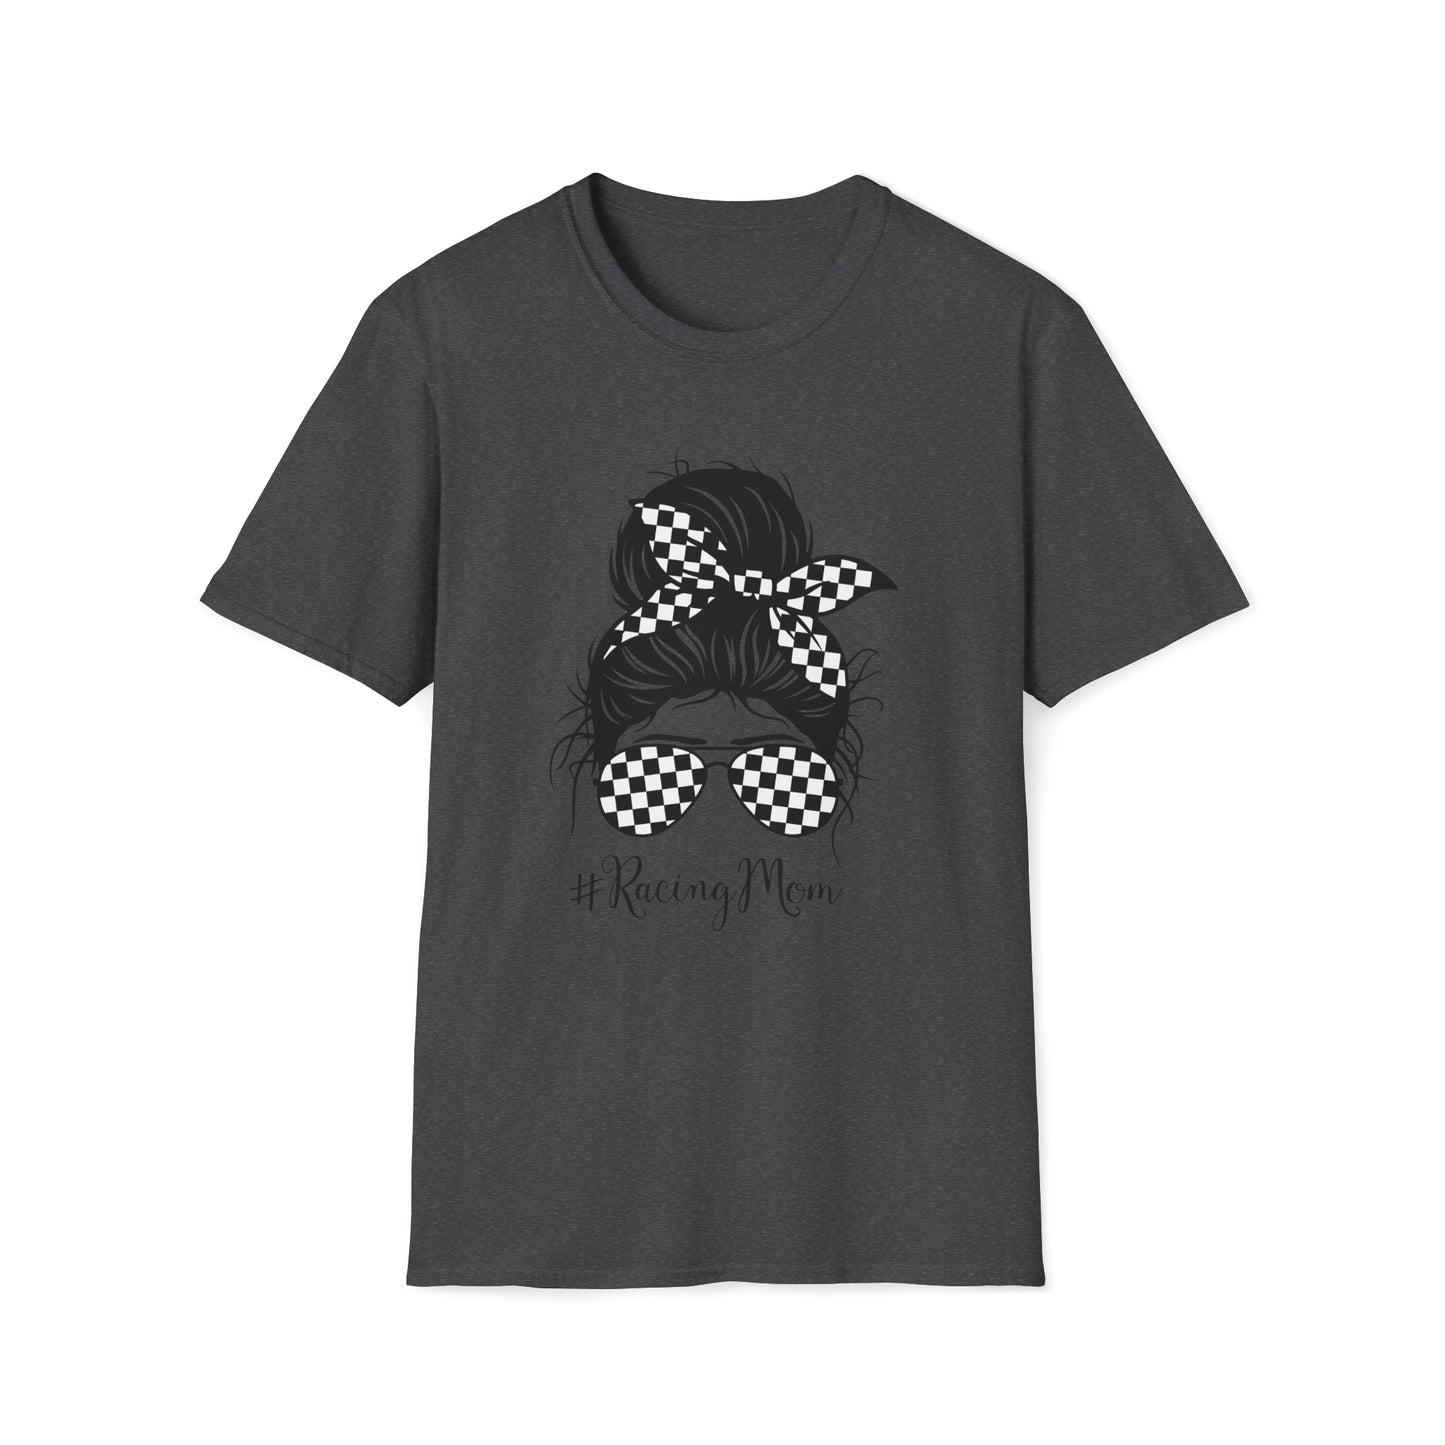 Racing Mom - Unisex Softstyle T-Shirt